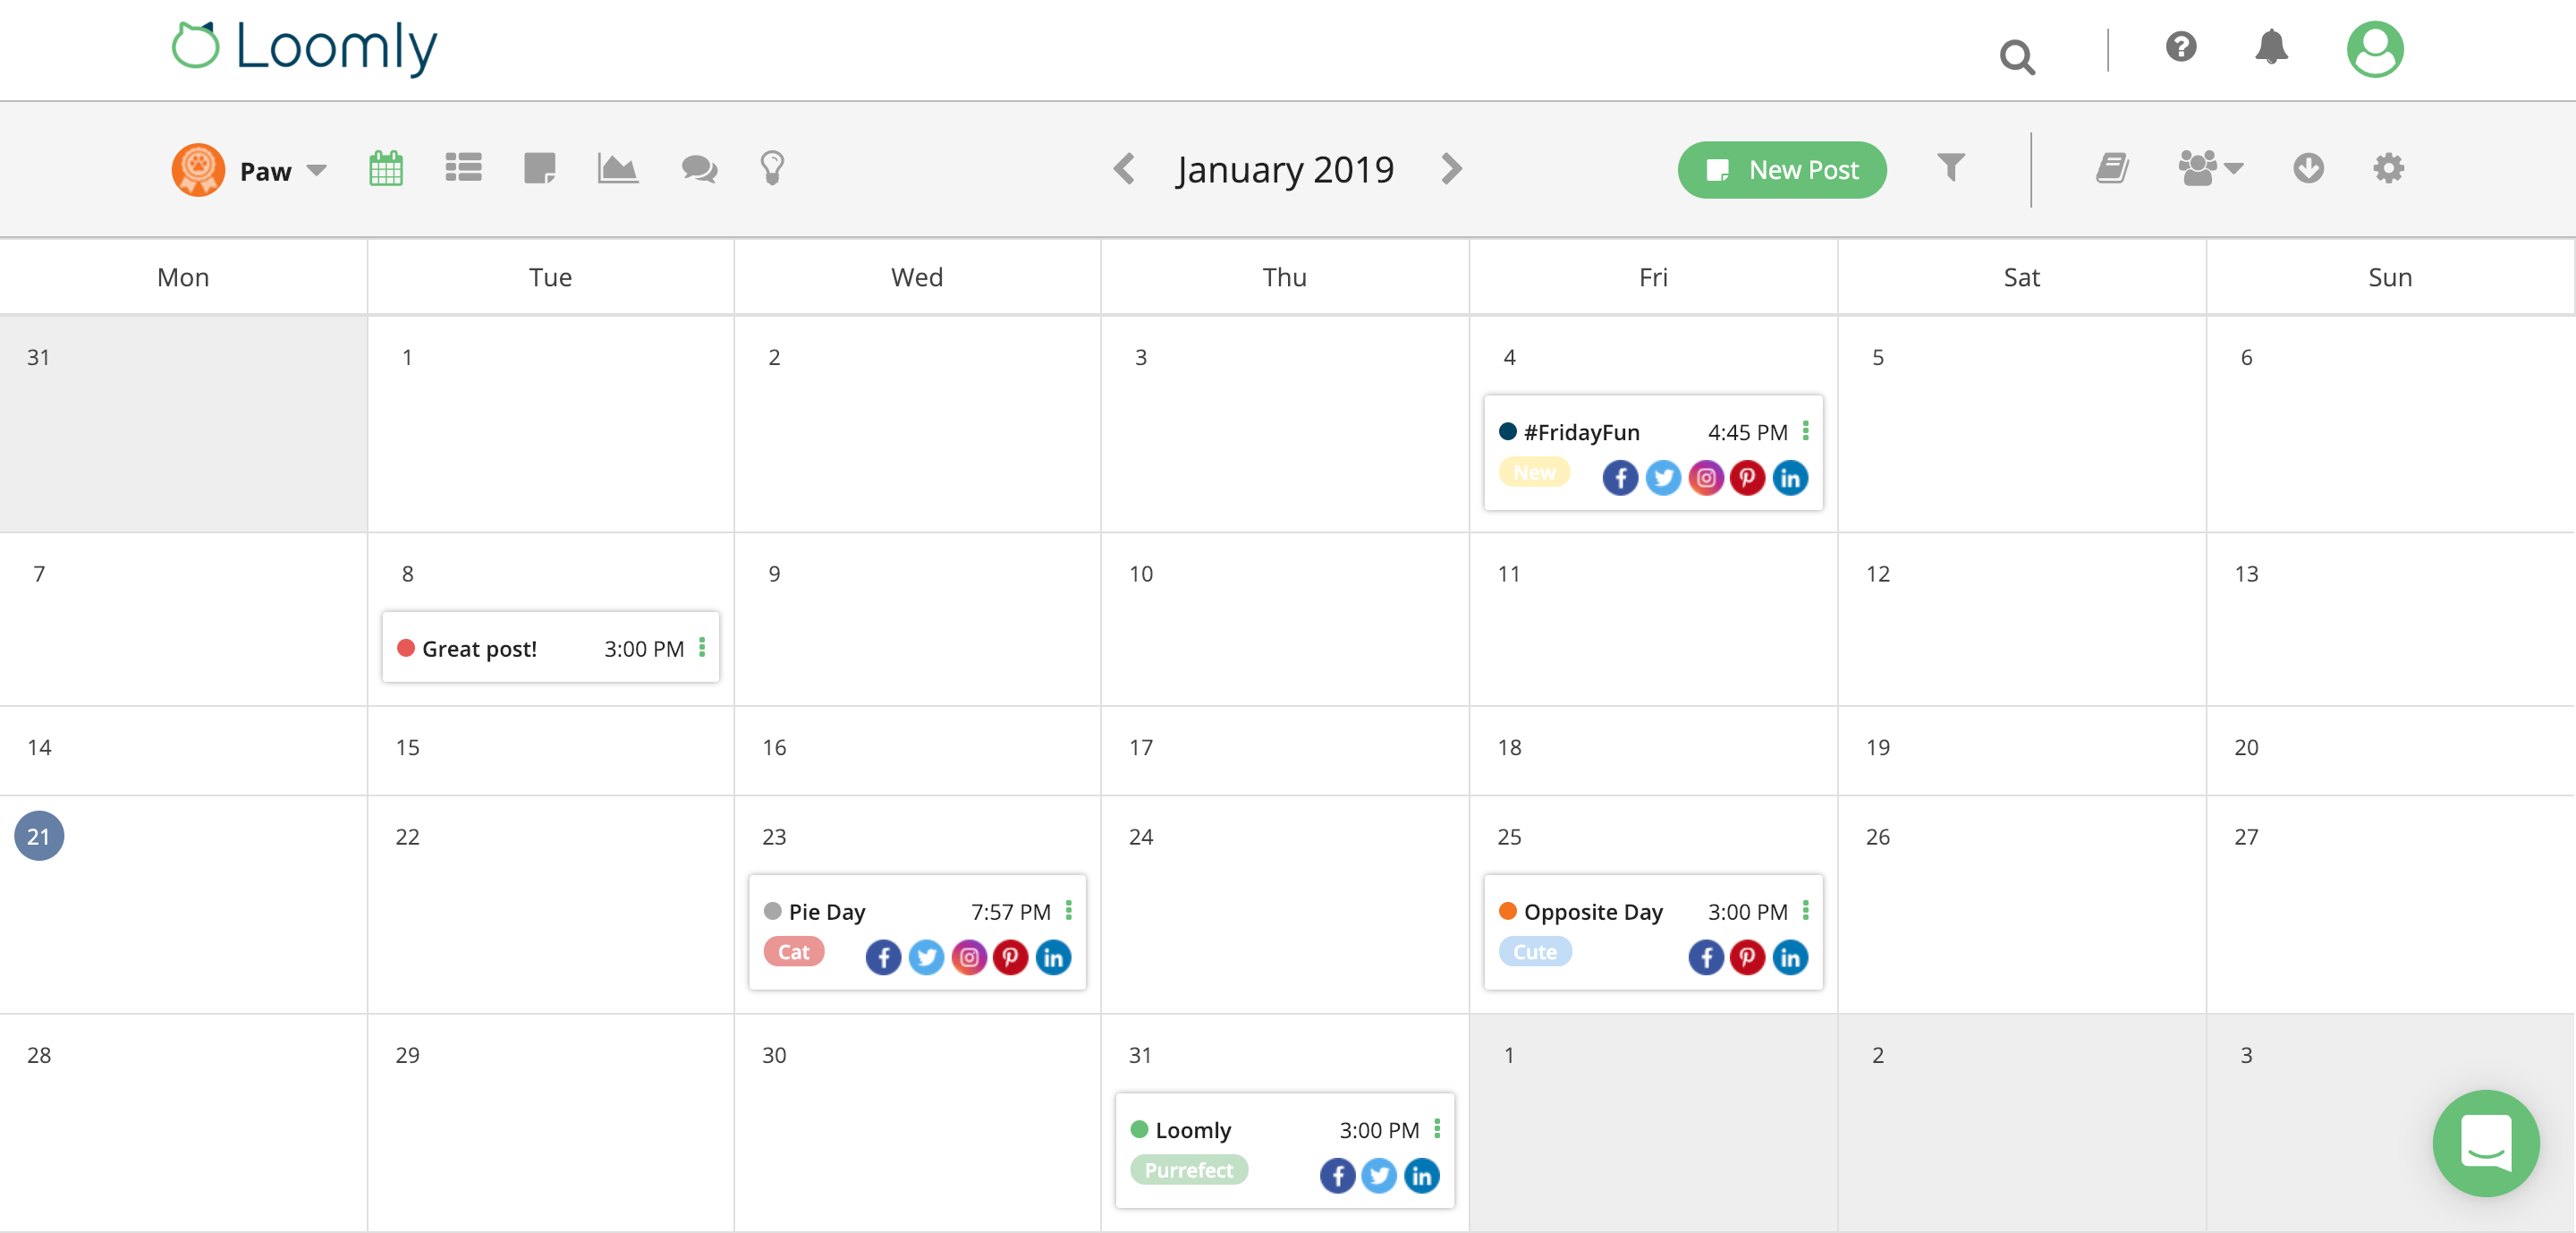 Loomly Software - Loomly Calendar View